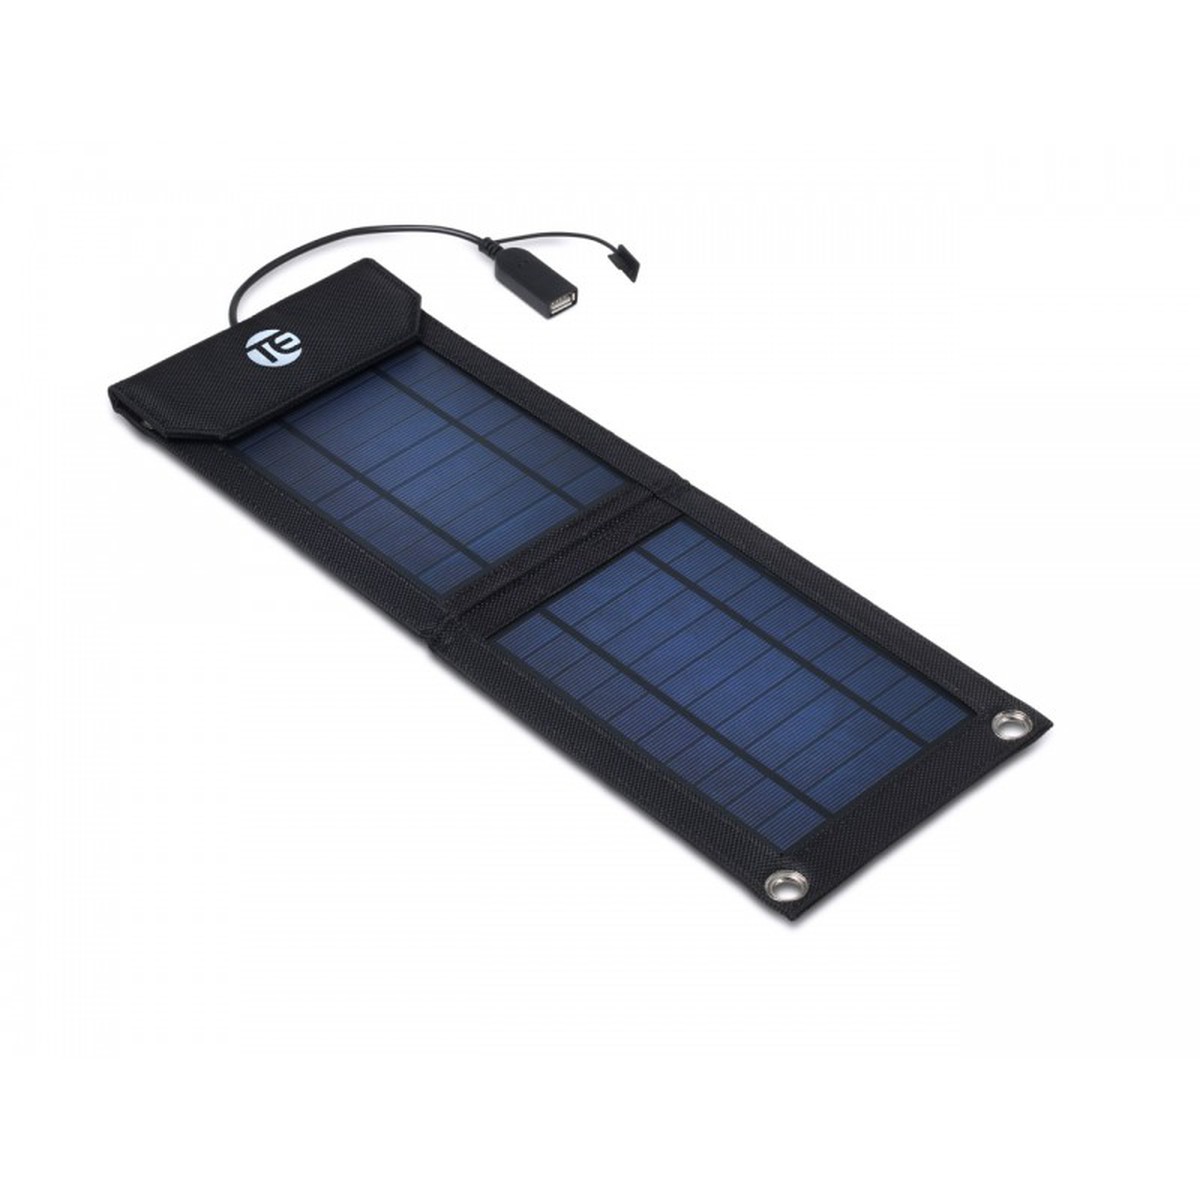  TexEnergy Panneau solaire Infinite Solar 5  195x140x14mm 5W 5V 1A